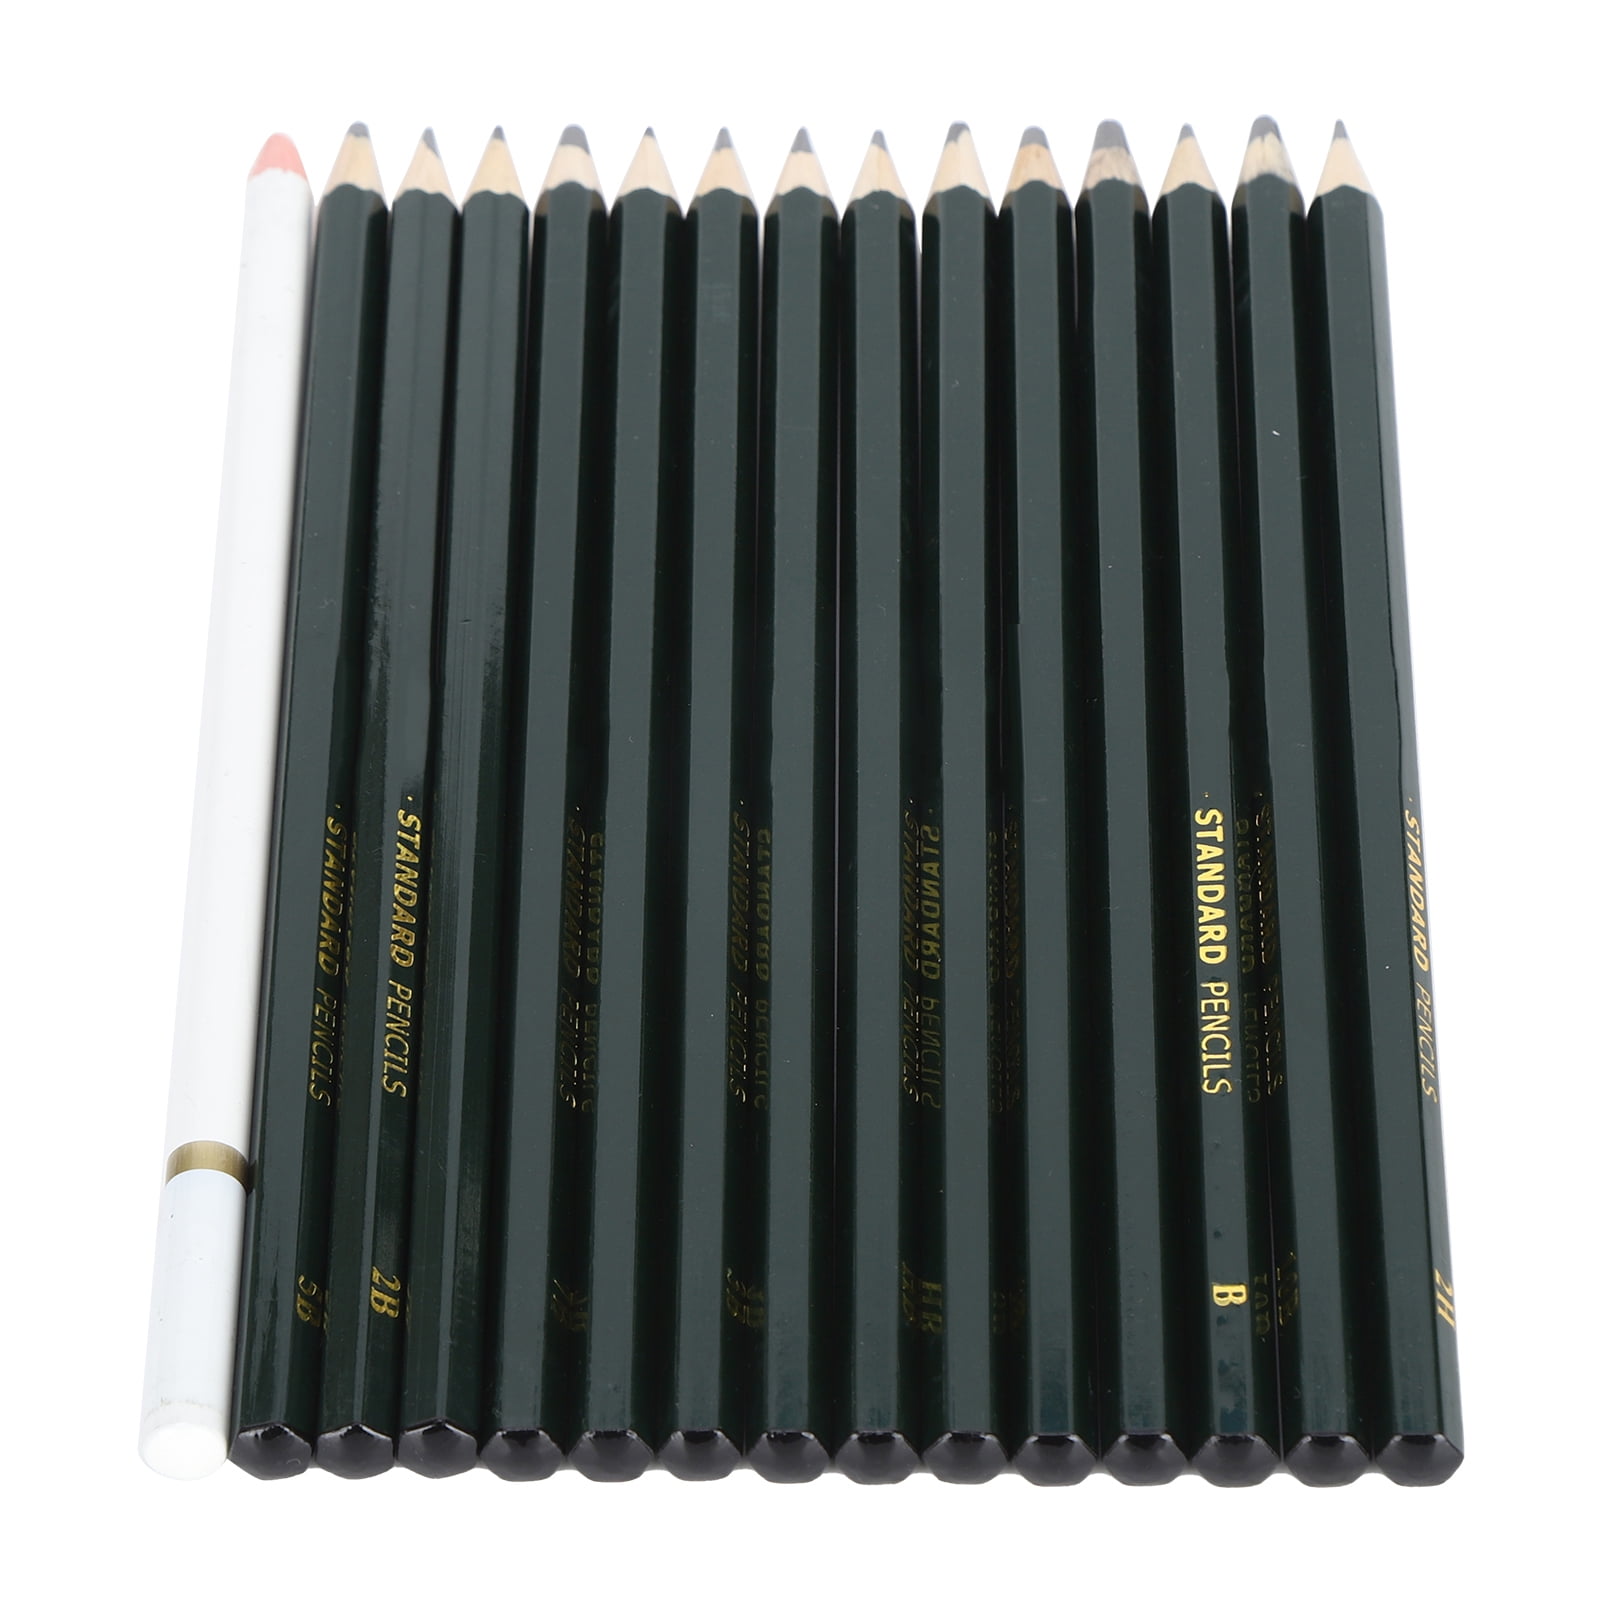 6 X Assorted Soft Lead Sketching Artist Pencils Drawing Graphite Graded 8B  to HB  Walmartcom